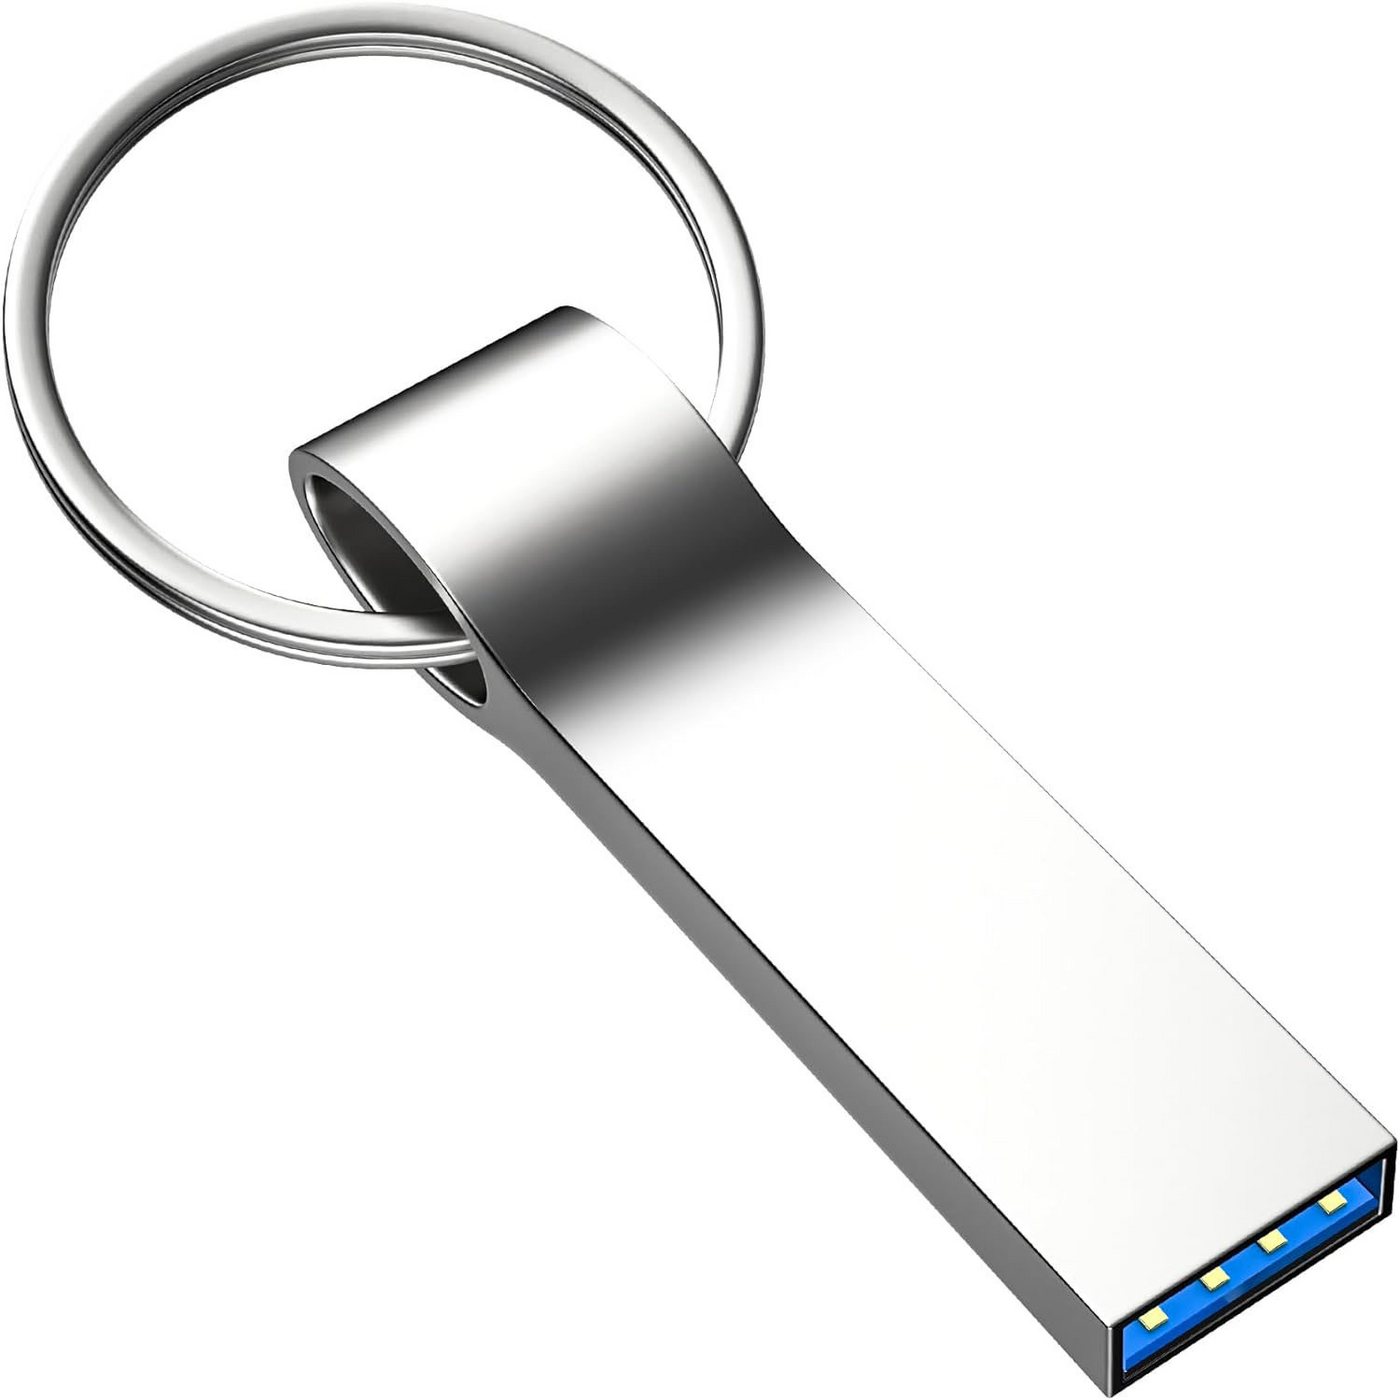 Haiaveng Usb Stick 3.0 64GB Große Metall Tragbar USB Flash Drive USB-Stick (USB 3.0, mit Schlüsselanhänger Memory Stick für Computer/PC/Laptop/Tablet) von Haiaveng